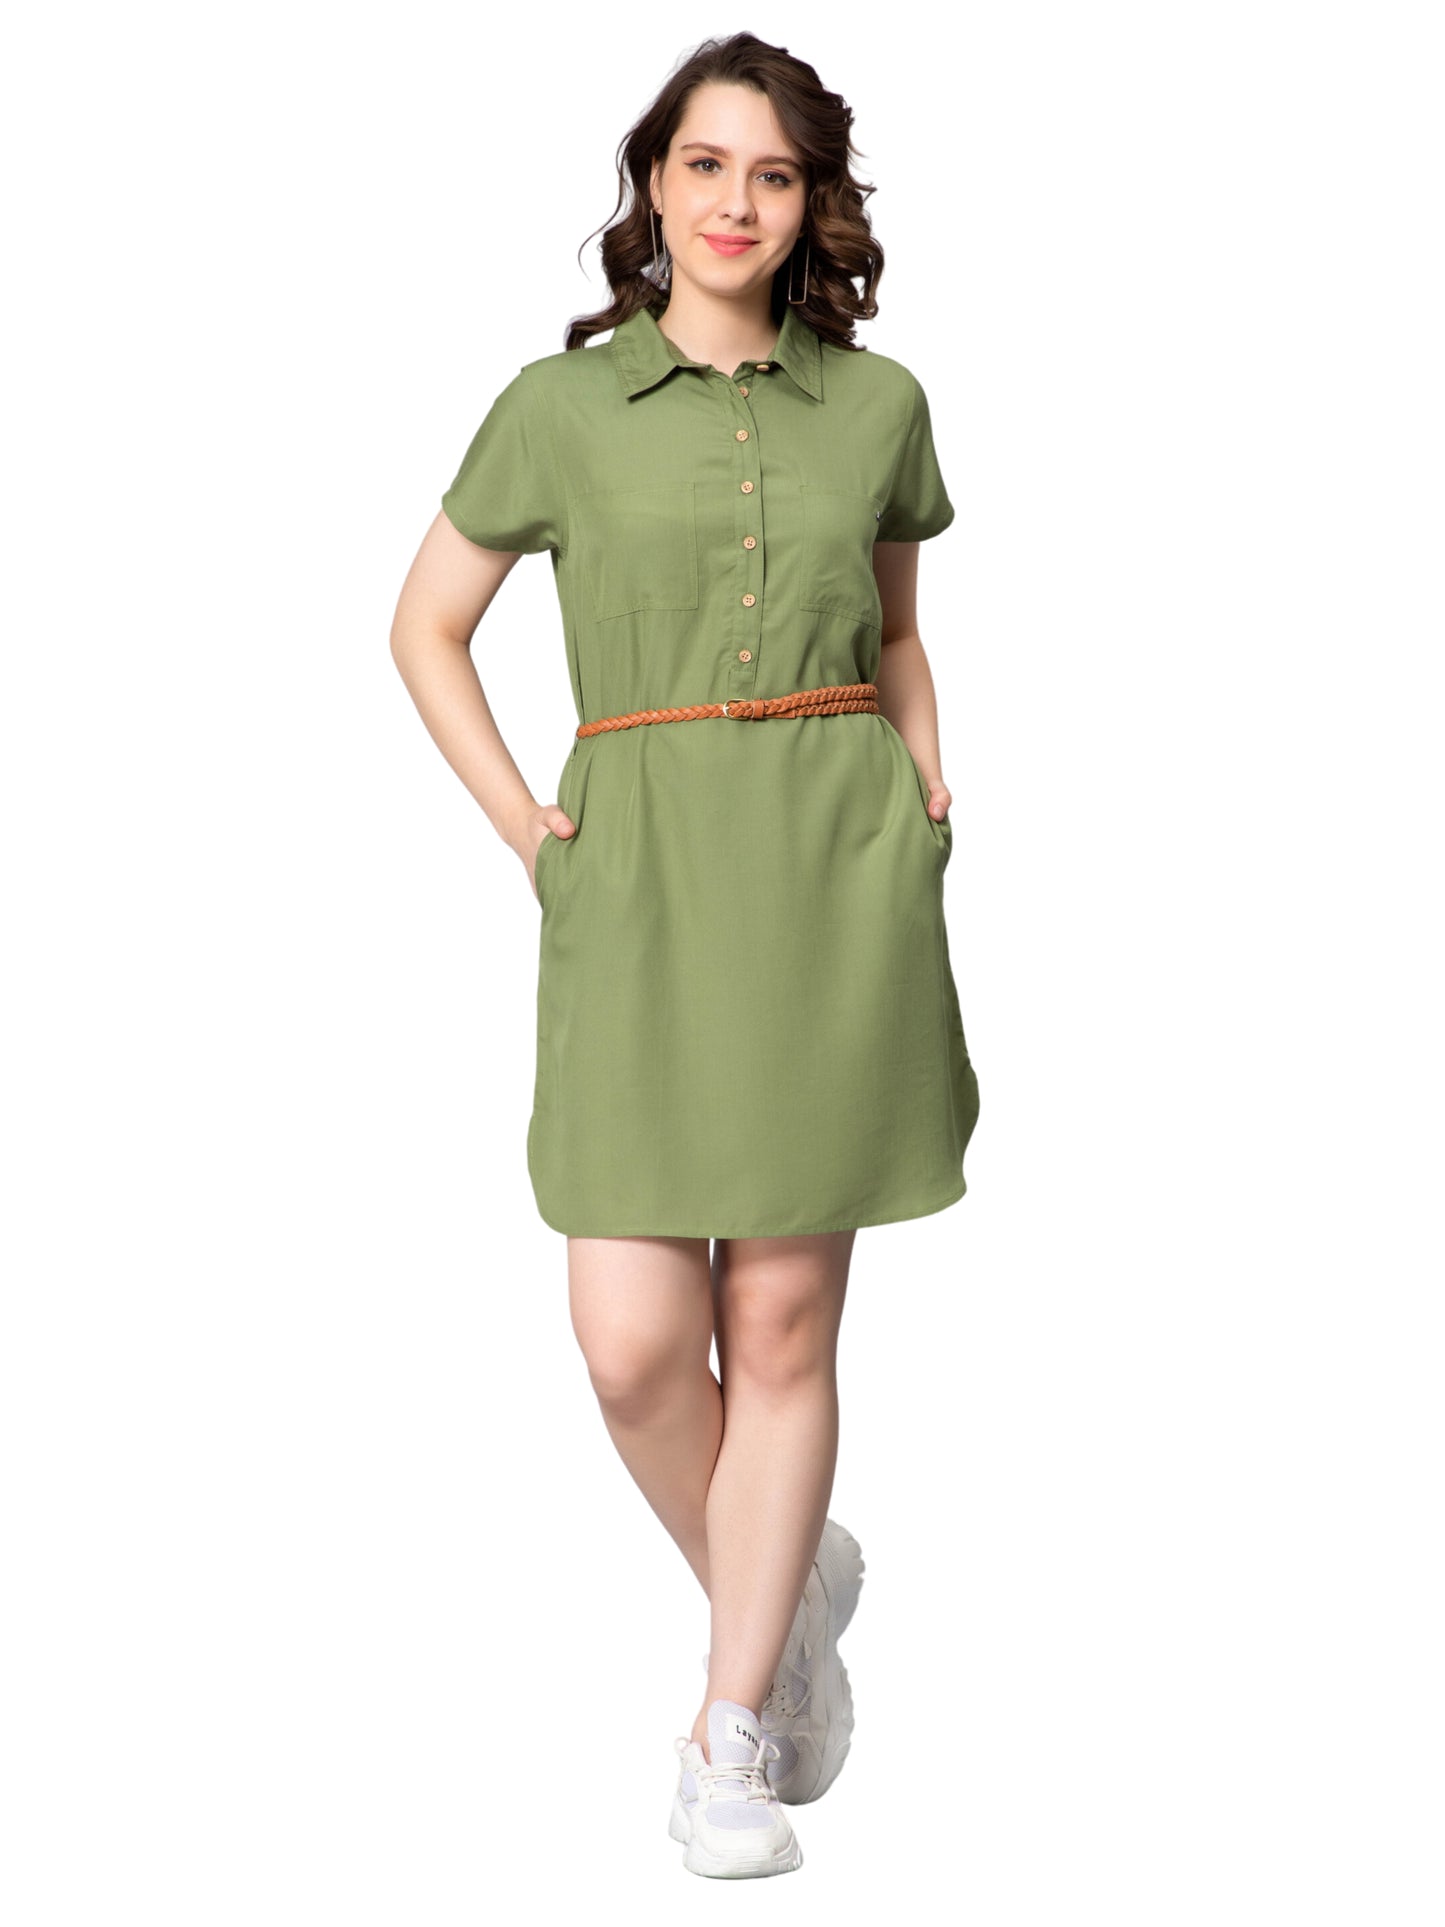 NUEVOSDAMAS Women Denim Long Shirt Style Midi Dress Green